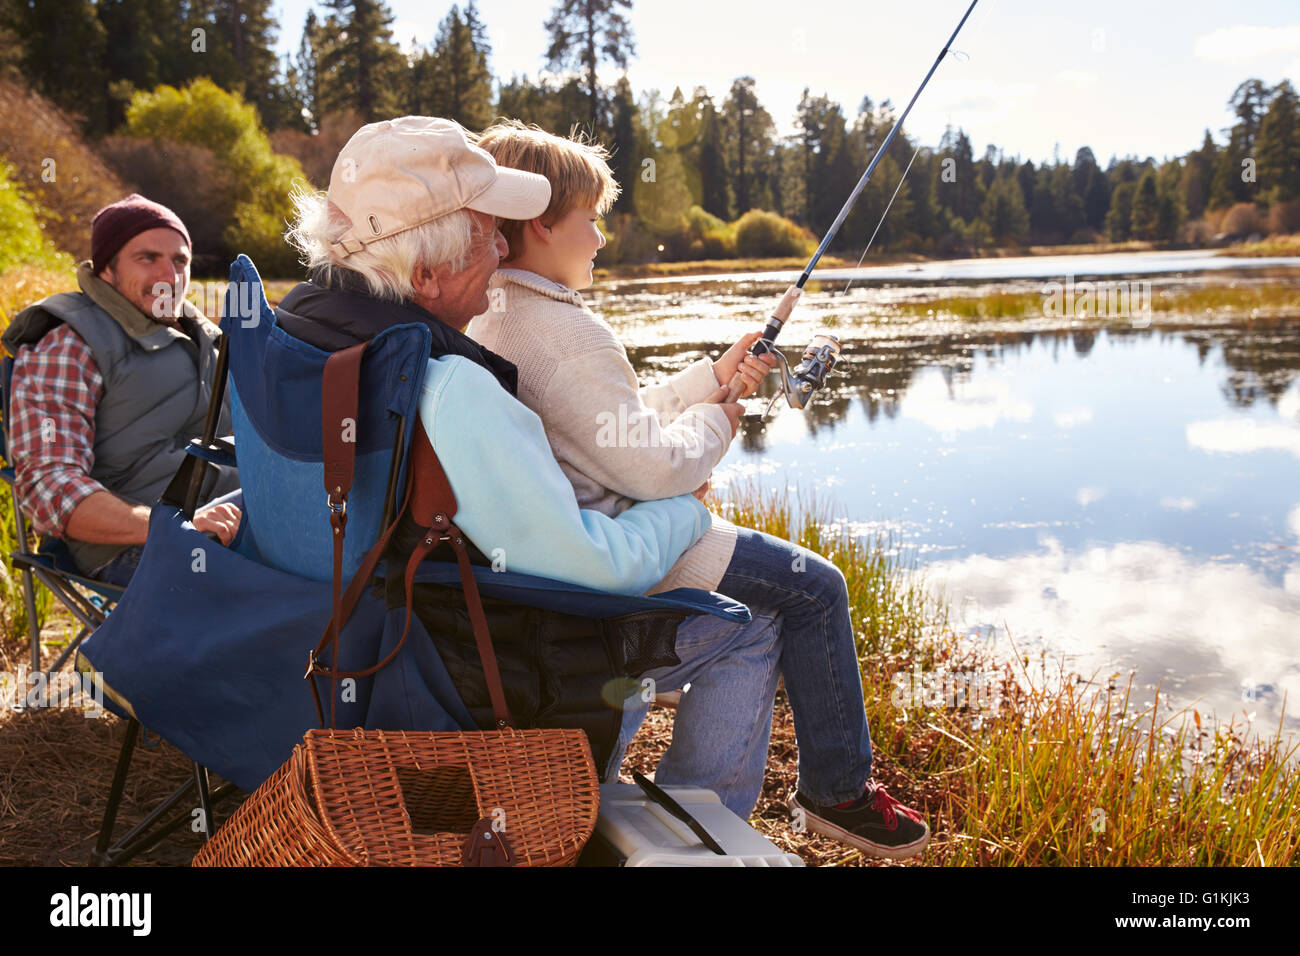 Grandad teaches his grandson to fish at a lake, dad watching Stock Photo